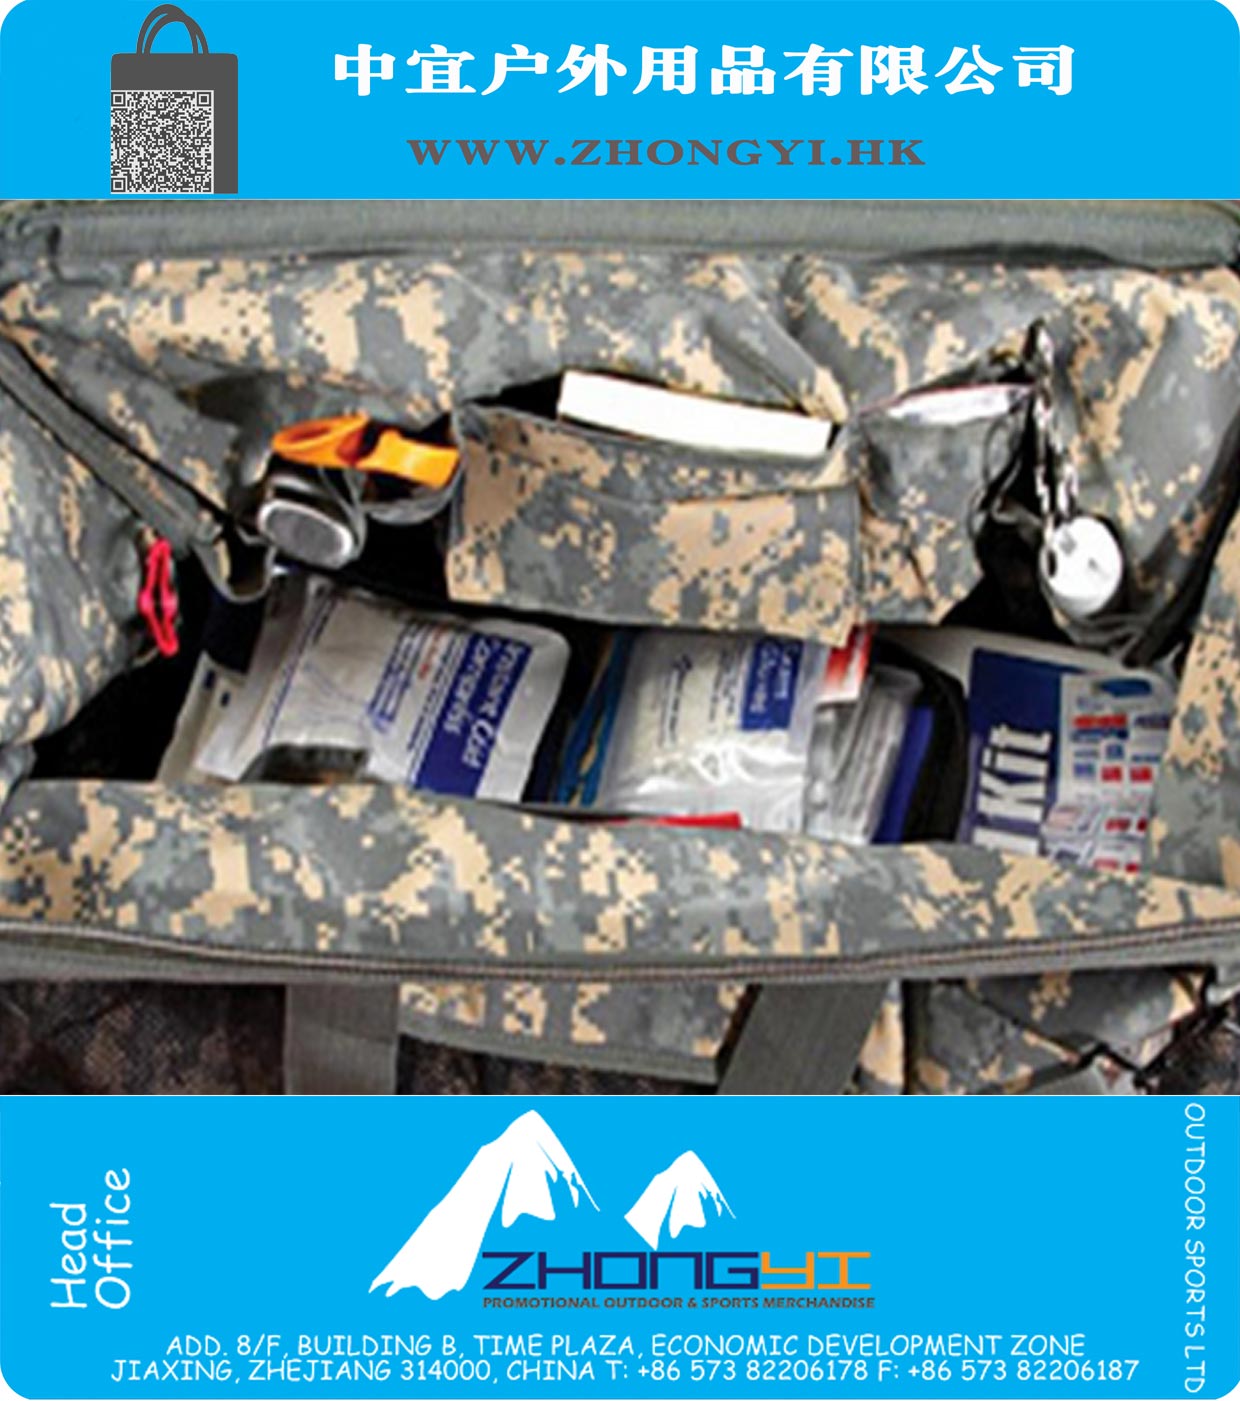 Military Style Paramedic Bag